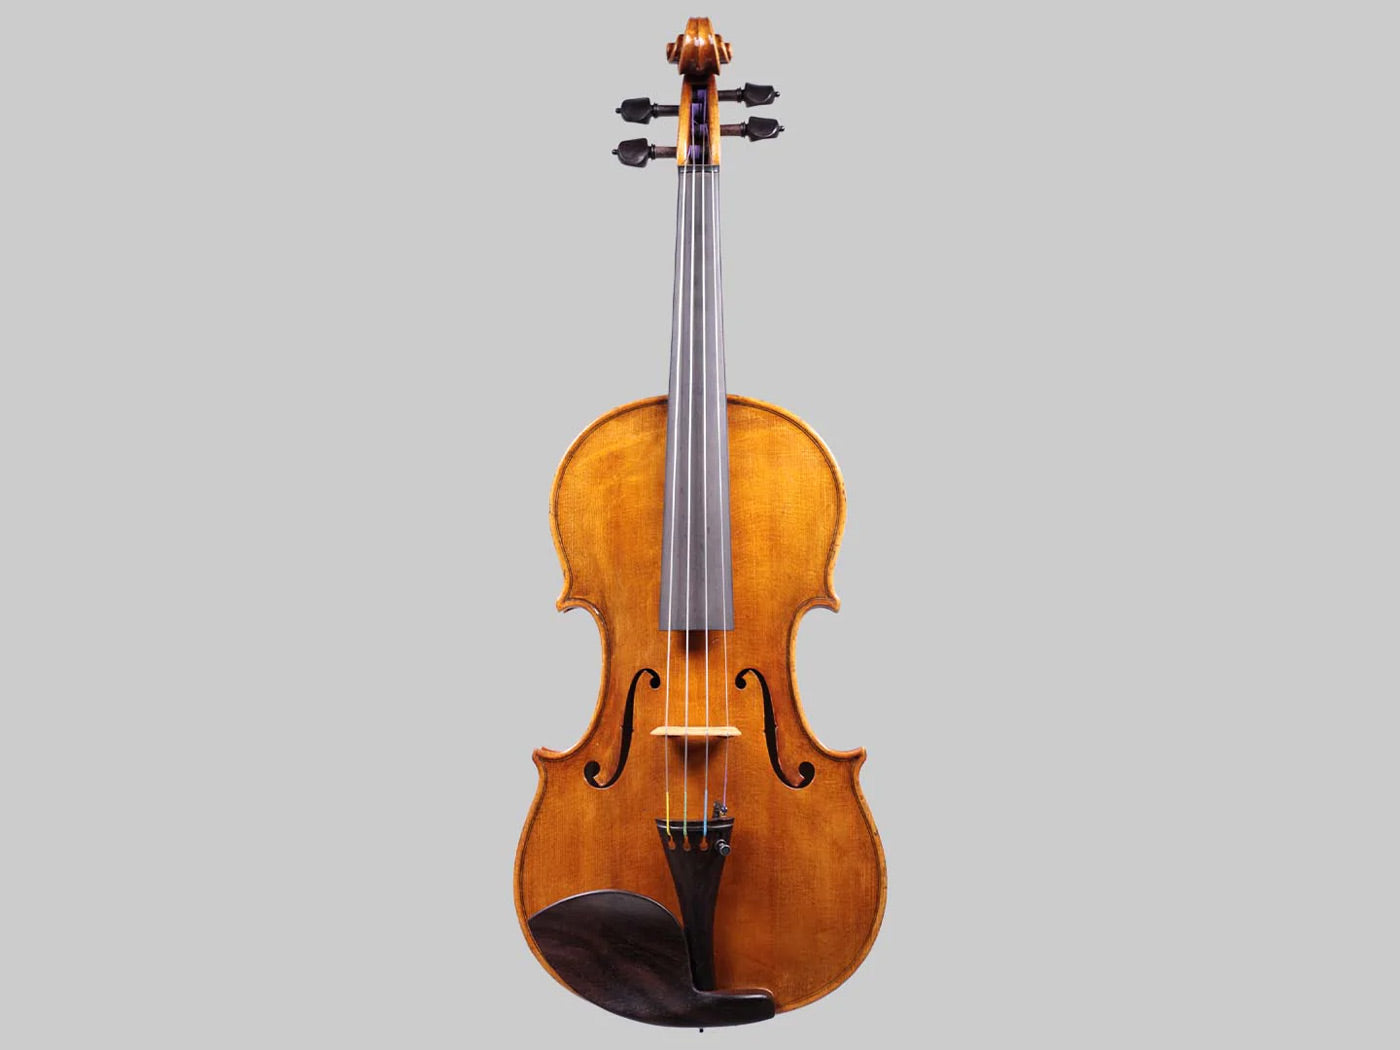 The Journey of a Ukrainian Violin